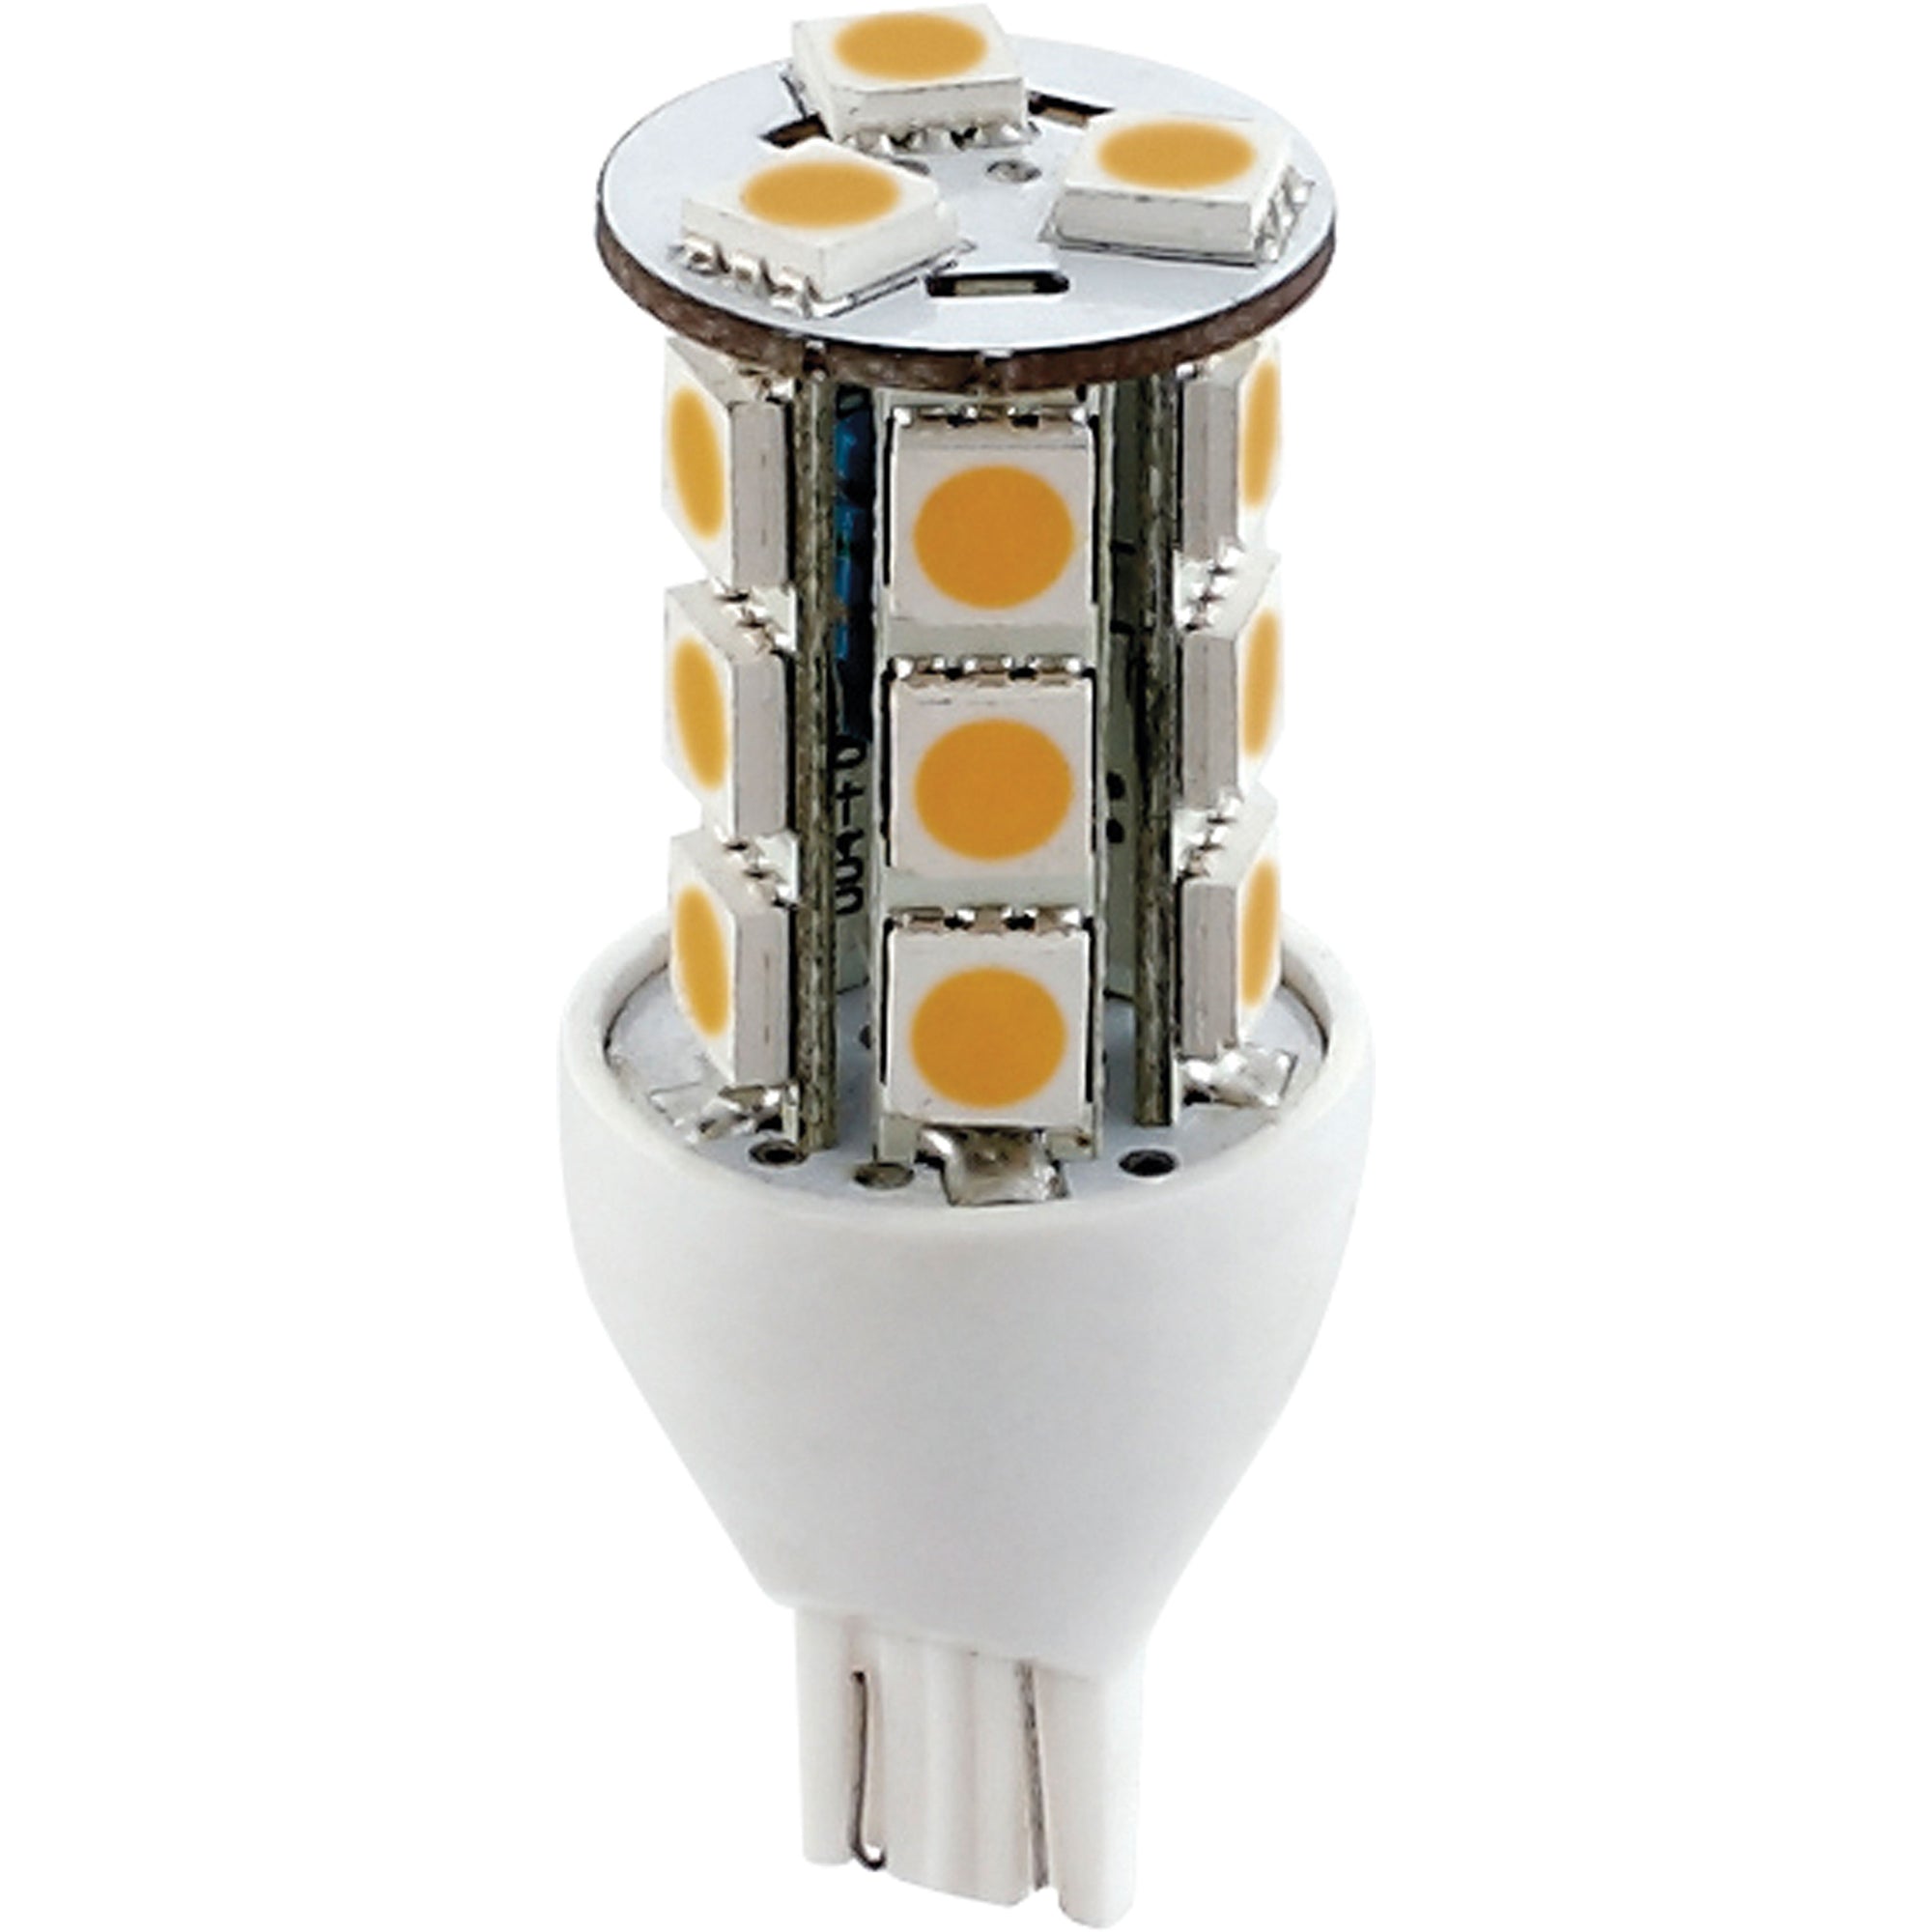 Ming's Mark 5050130 Green LongLife 12V LED Light Bulb Tower with 921/T15 Wedge Base - 200 Lumens, Natural White